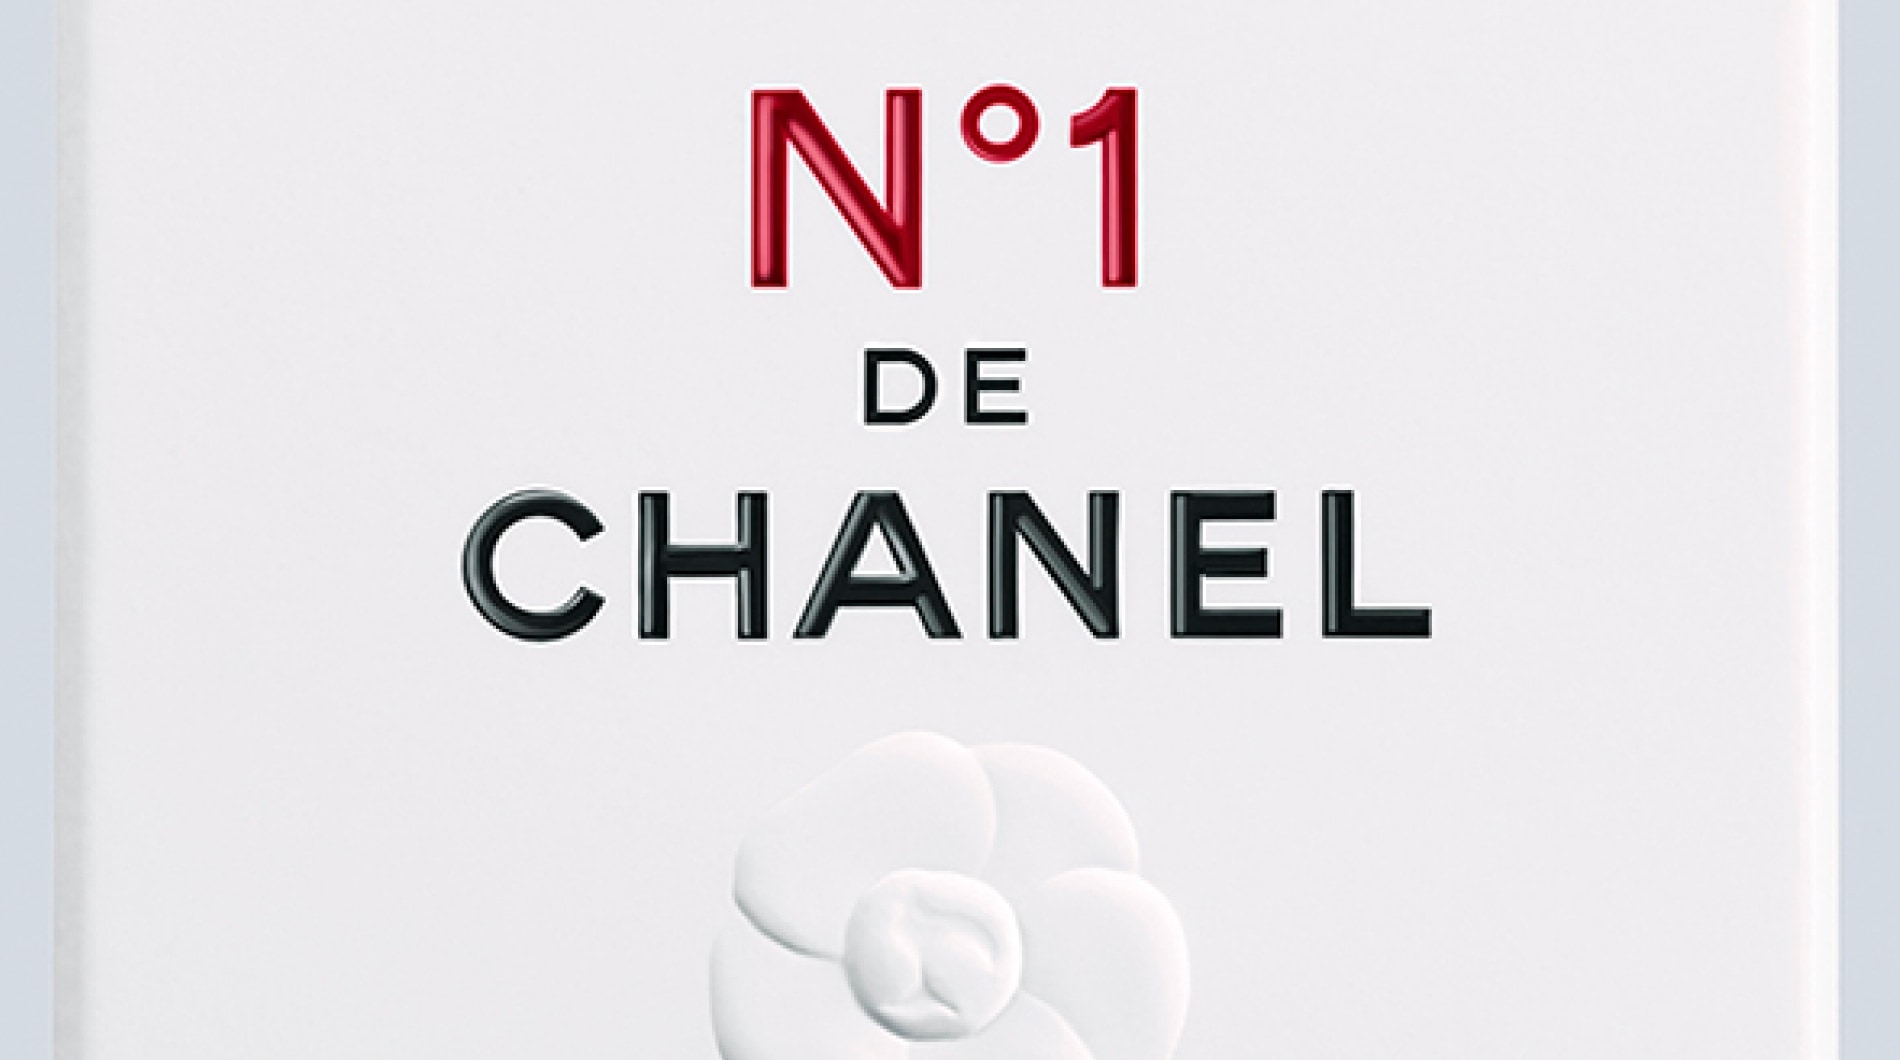 Chanel No 1